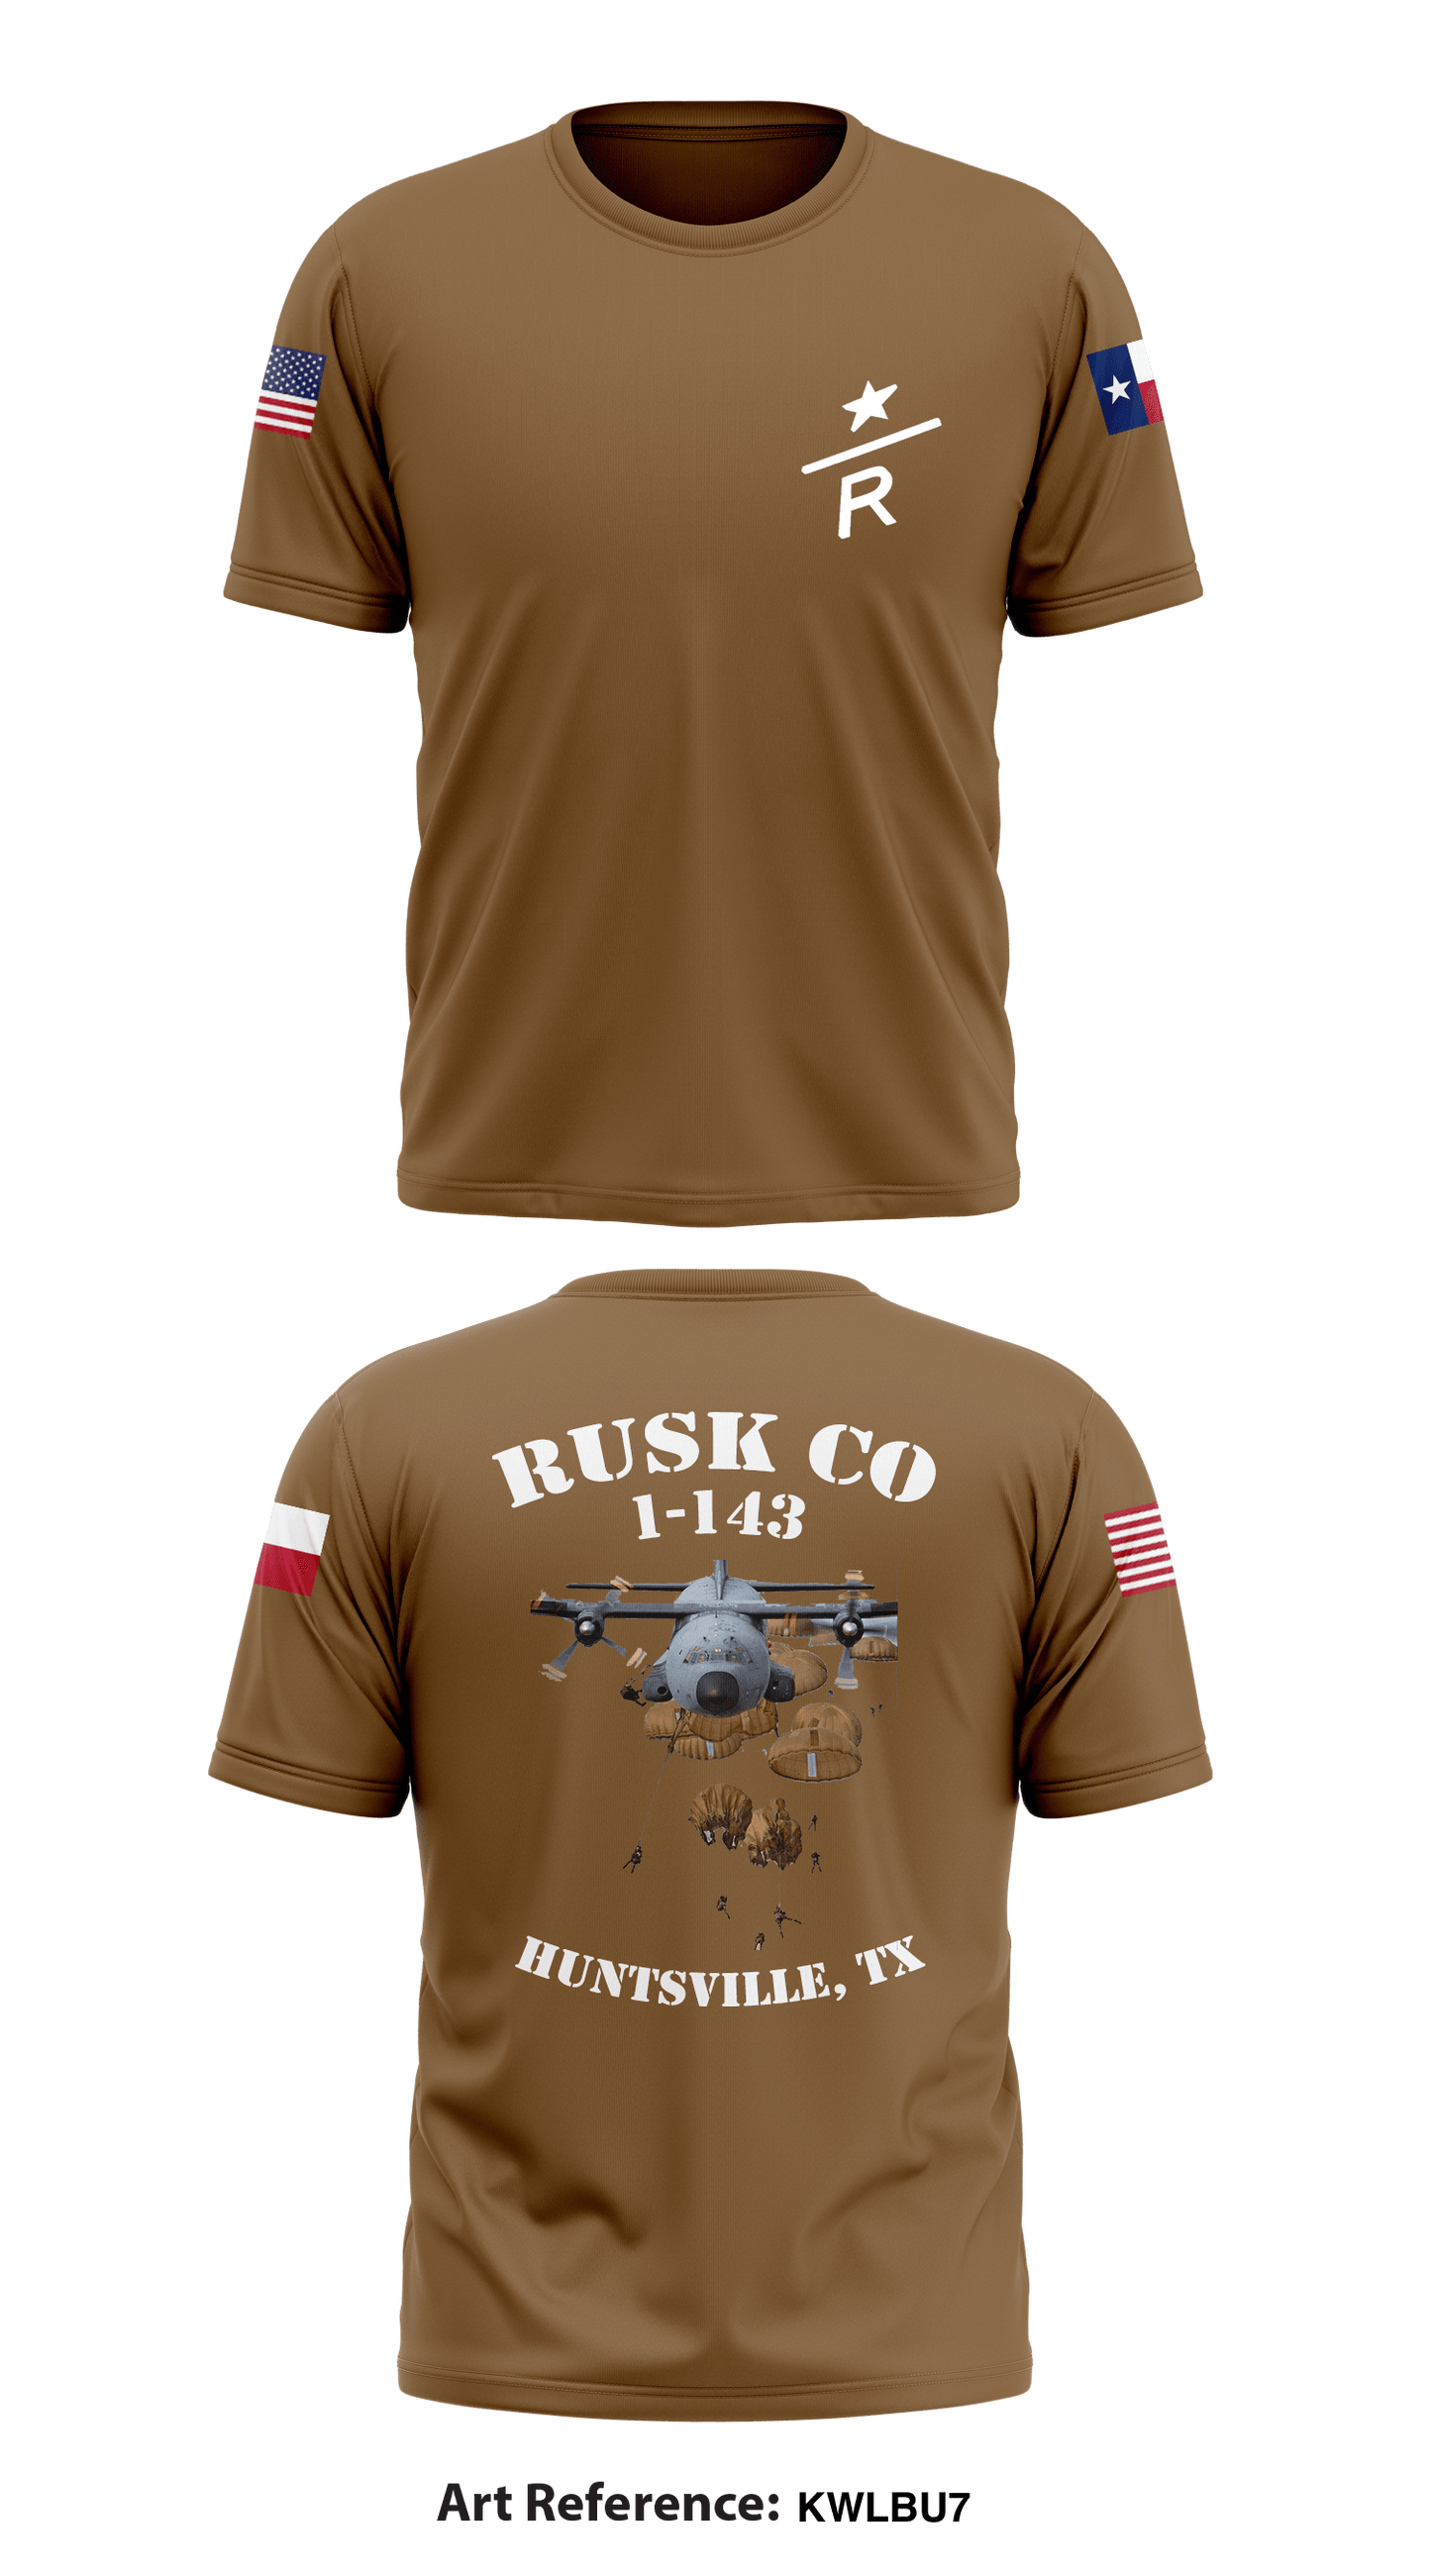 Rusk Company 1-143 Store 1 Core Men's SS Performance Tee - KwLBu7